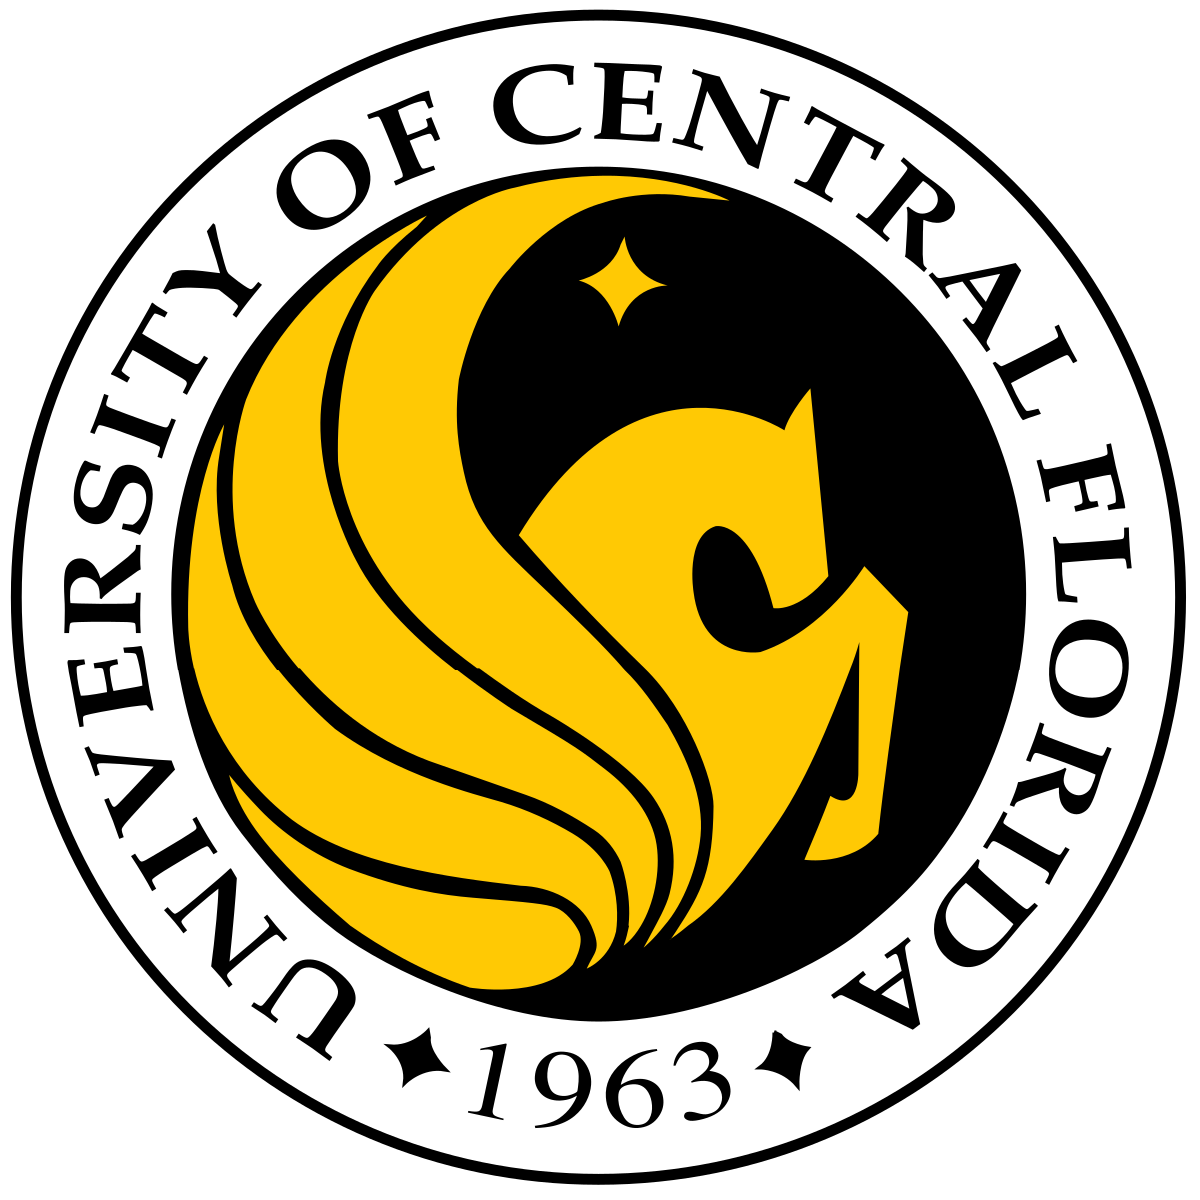 University of centra florida logo